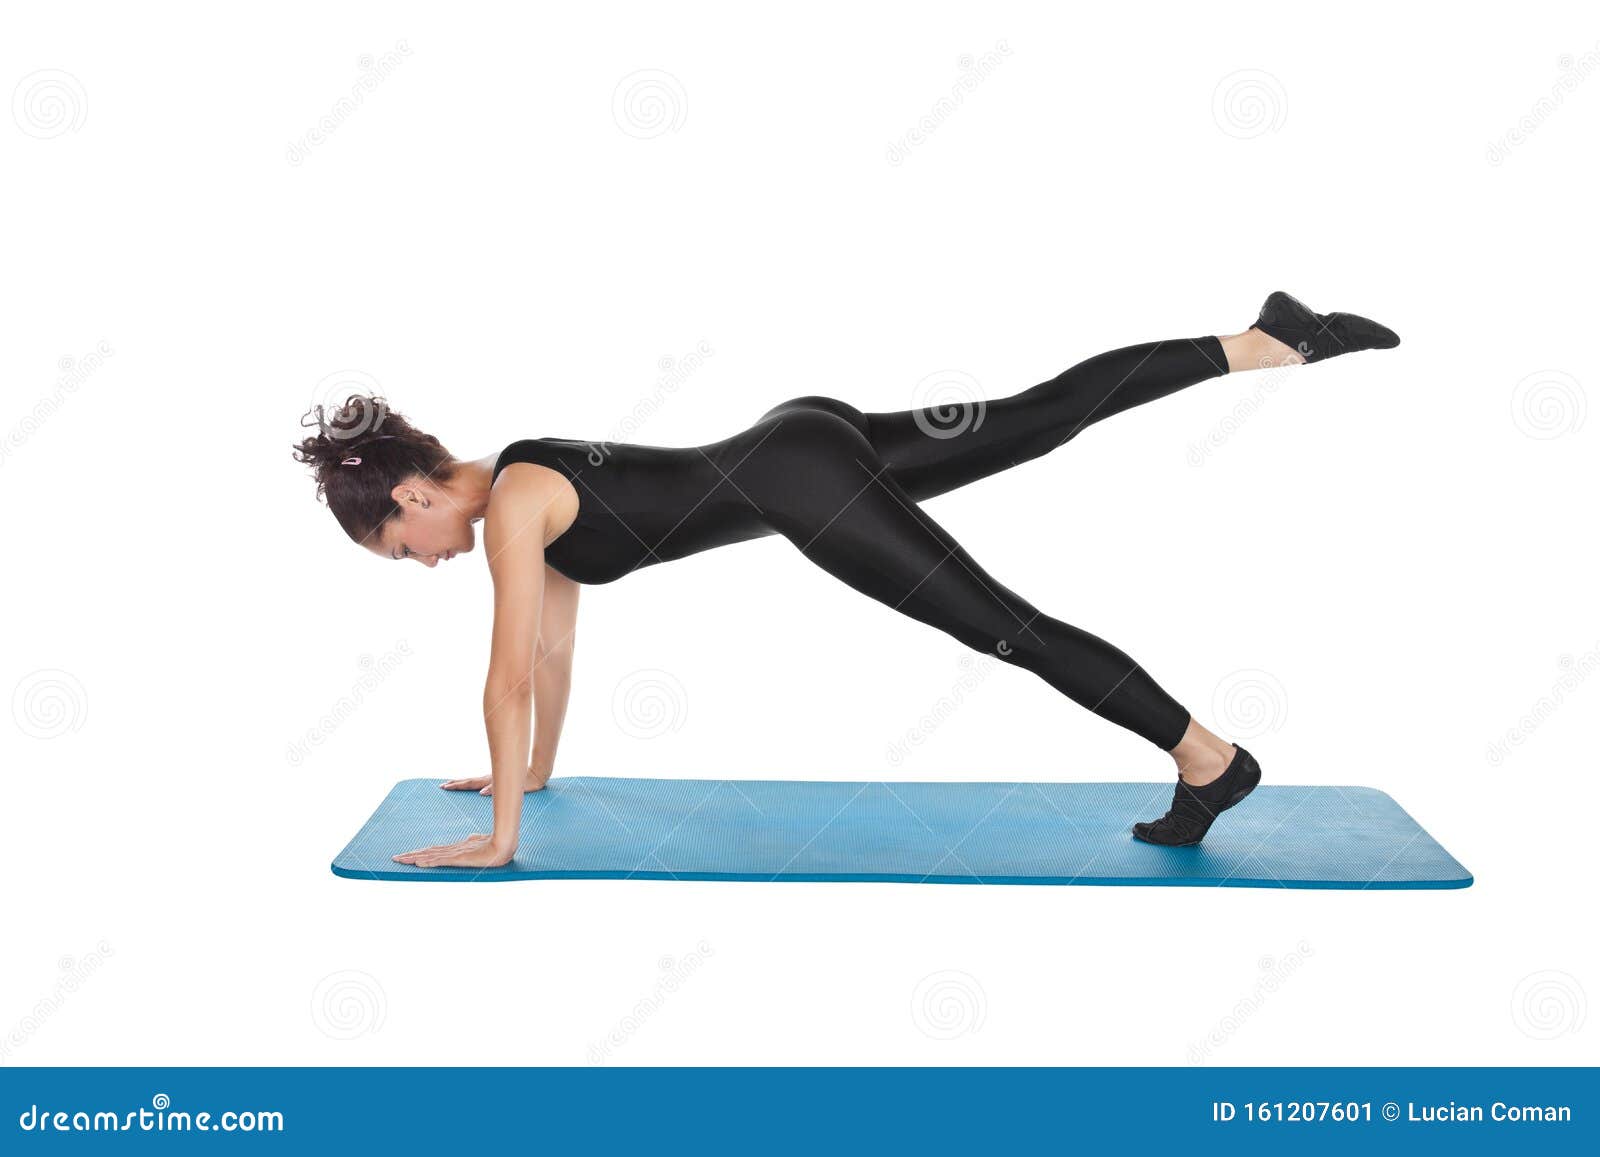 Leg pull front pilates stock image. Image of figure - 161207601